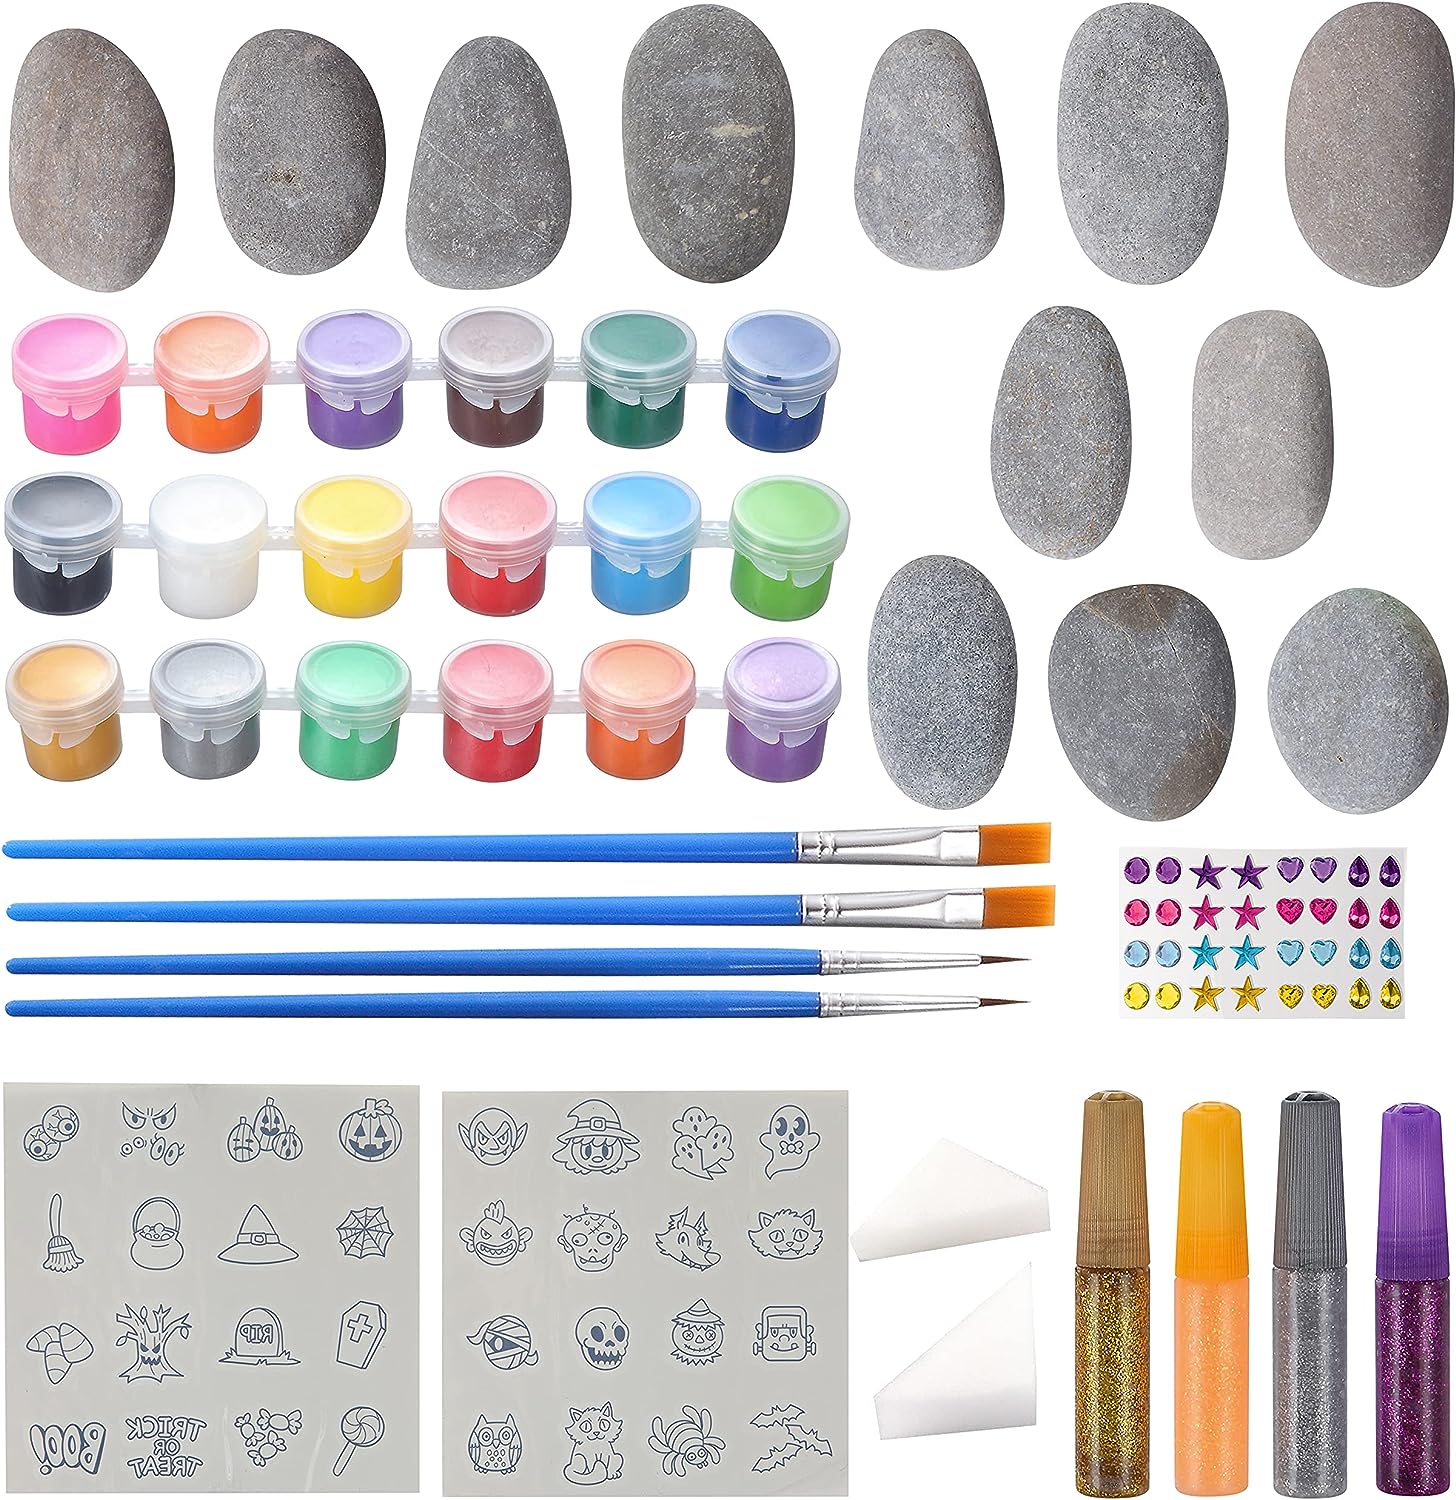 Joyin Klever Kits Halloween Rock Painting Kit for Kids, Creativity Arts Crafts DIY Supplies Kit with 18 Paint Tubs and 12 Rocks